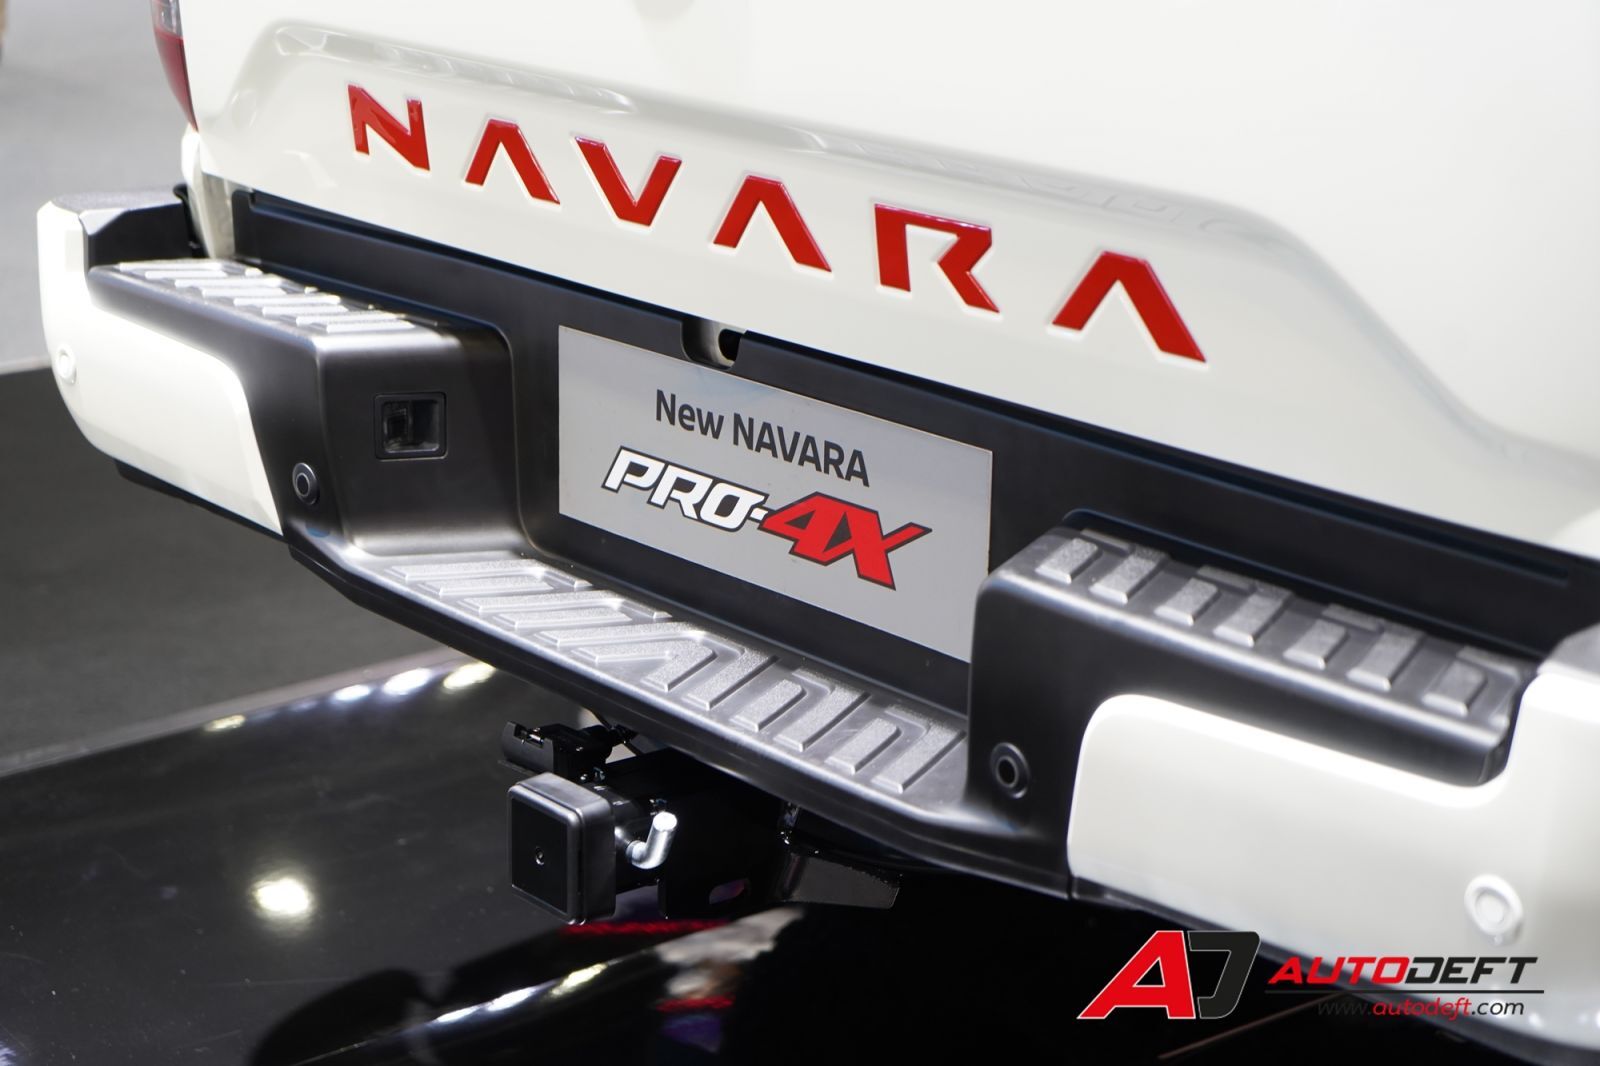 Nissan Navara Pro-4X WARRIOR